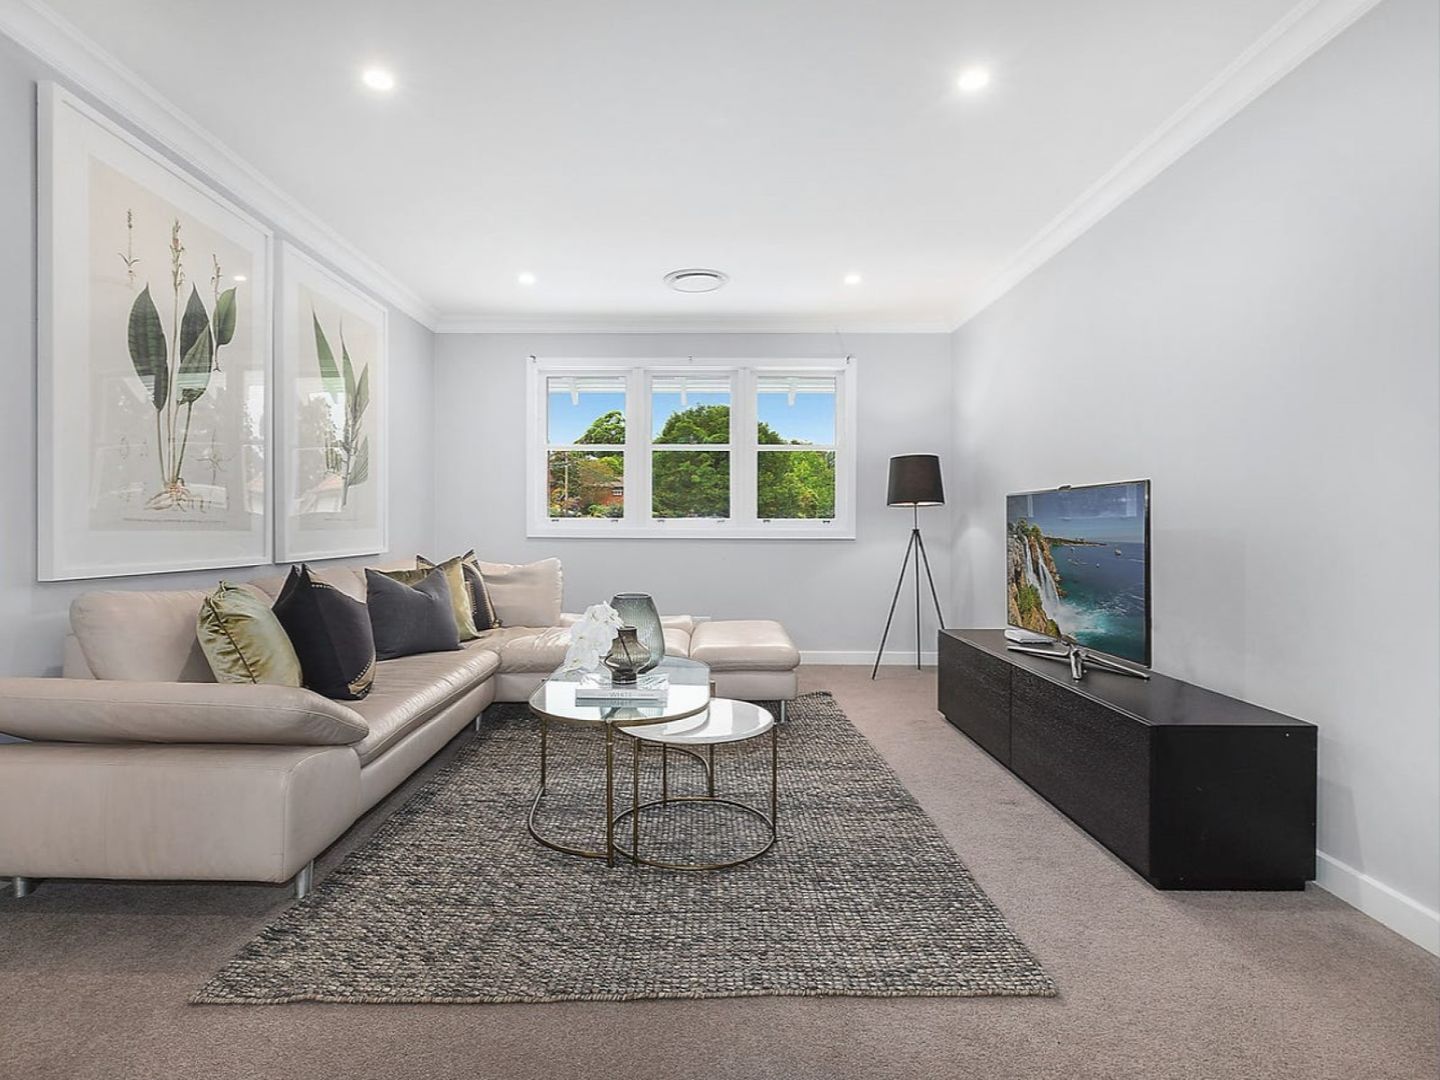 5 bedrooms House in 15 Smith ARTARMON NSW, 2064